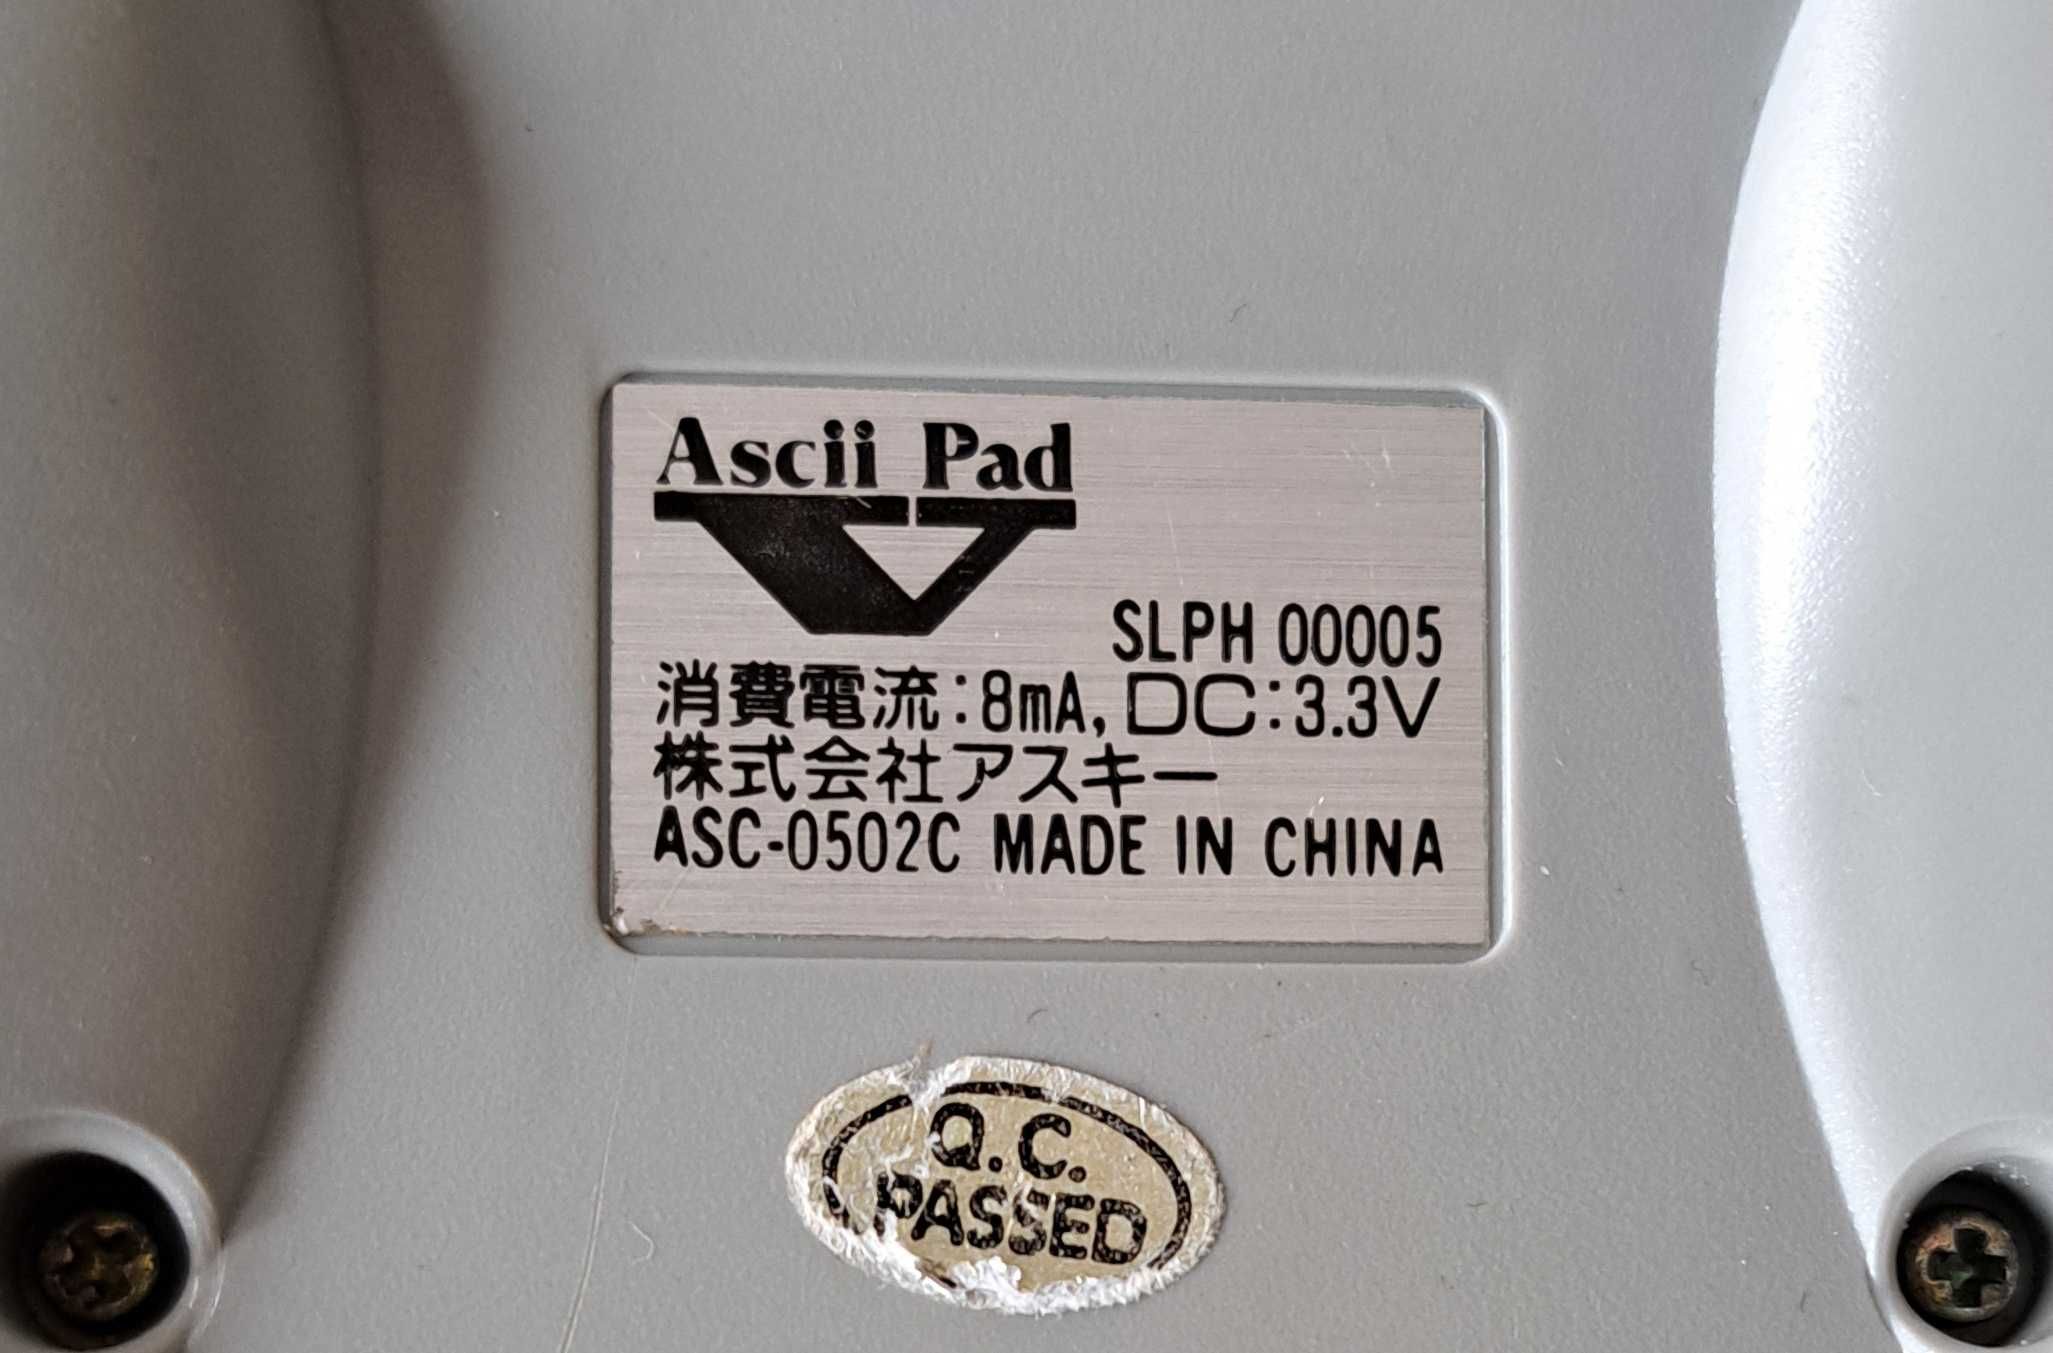 ASCII Pad V, SLPH-00005, PS1, licencjonowany